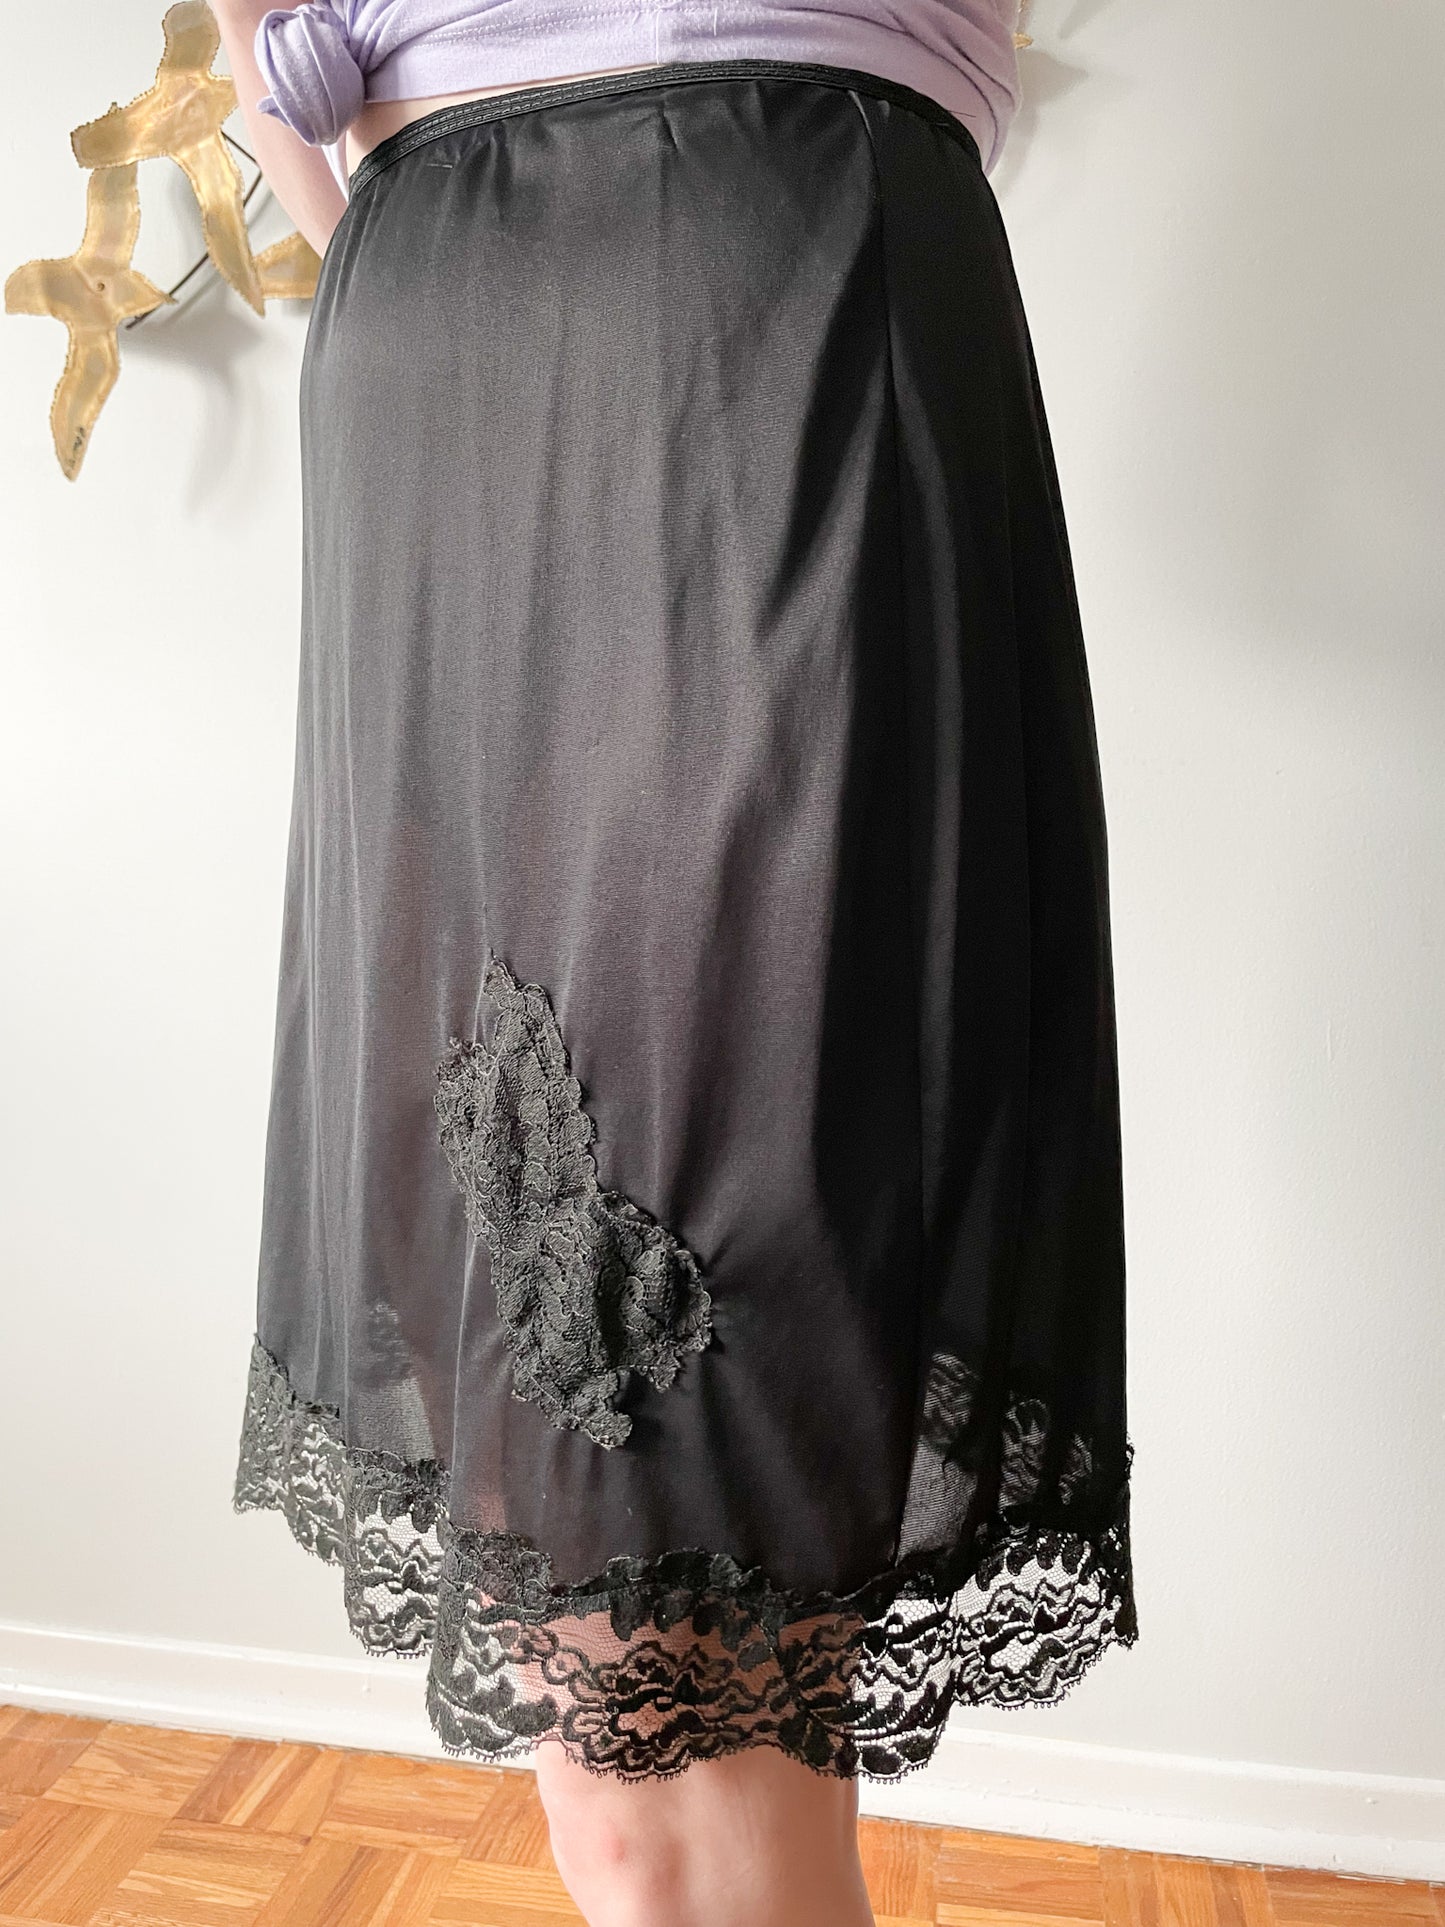 Black Lace Trimmed Slip Skirt - Small